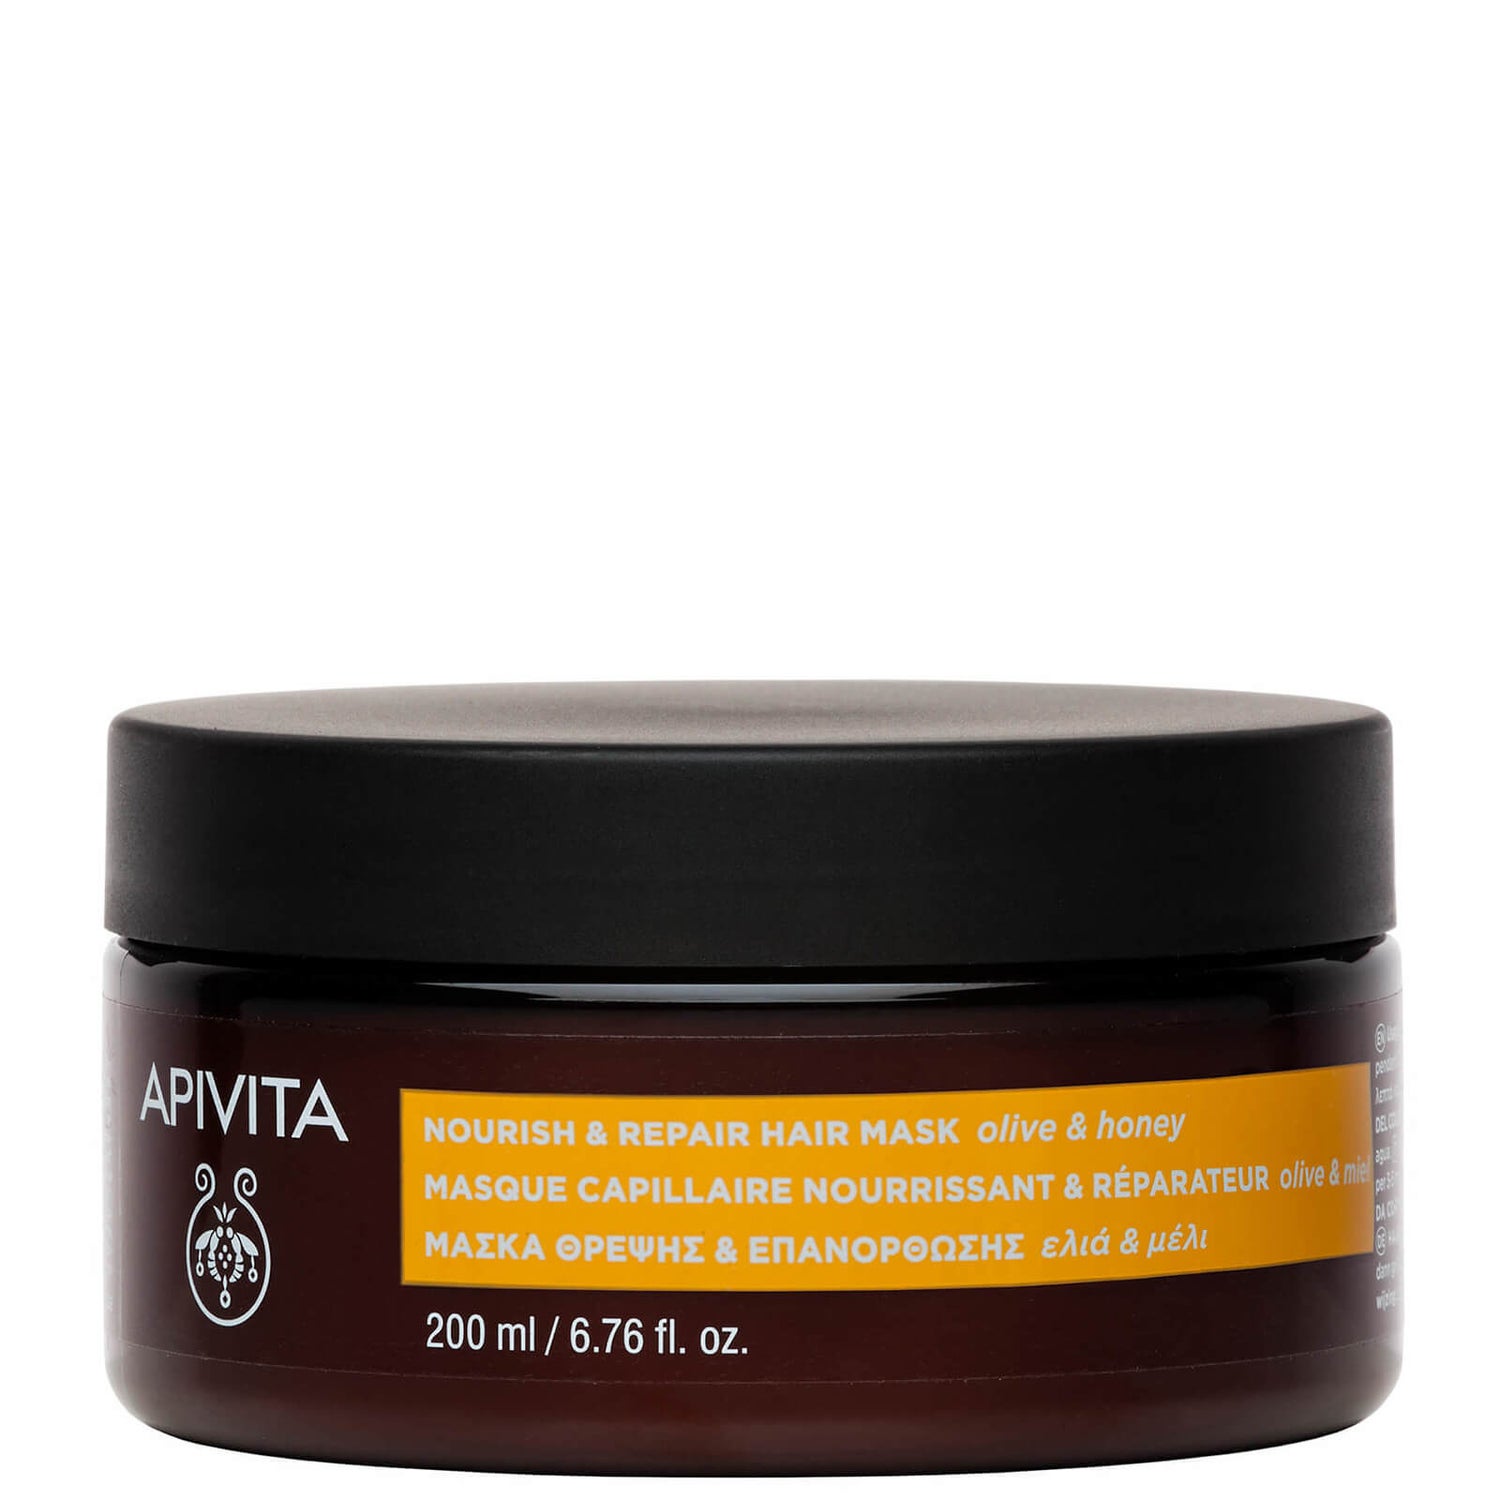 APIVITA 全面頭髮護理 滋潤修護髮膜 - 橄欖和蜂蜜 200ml